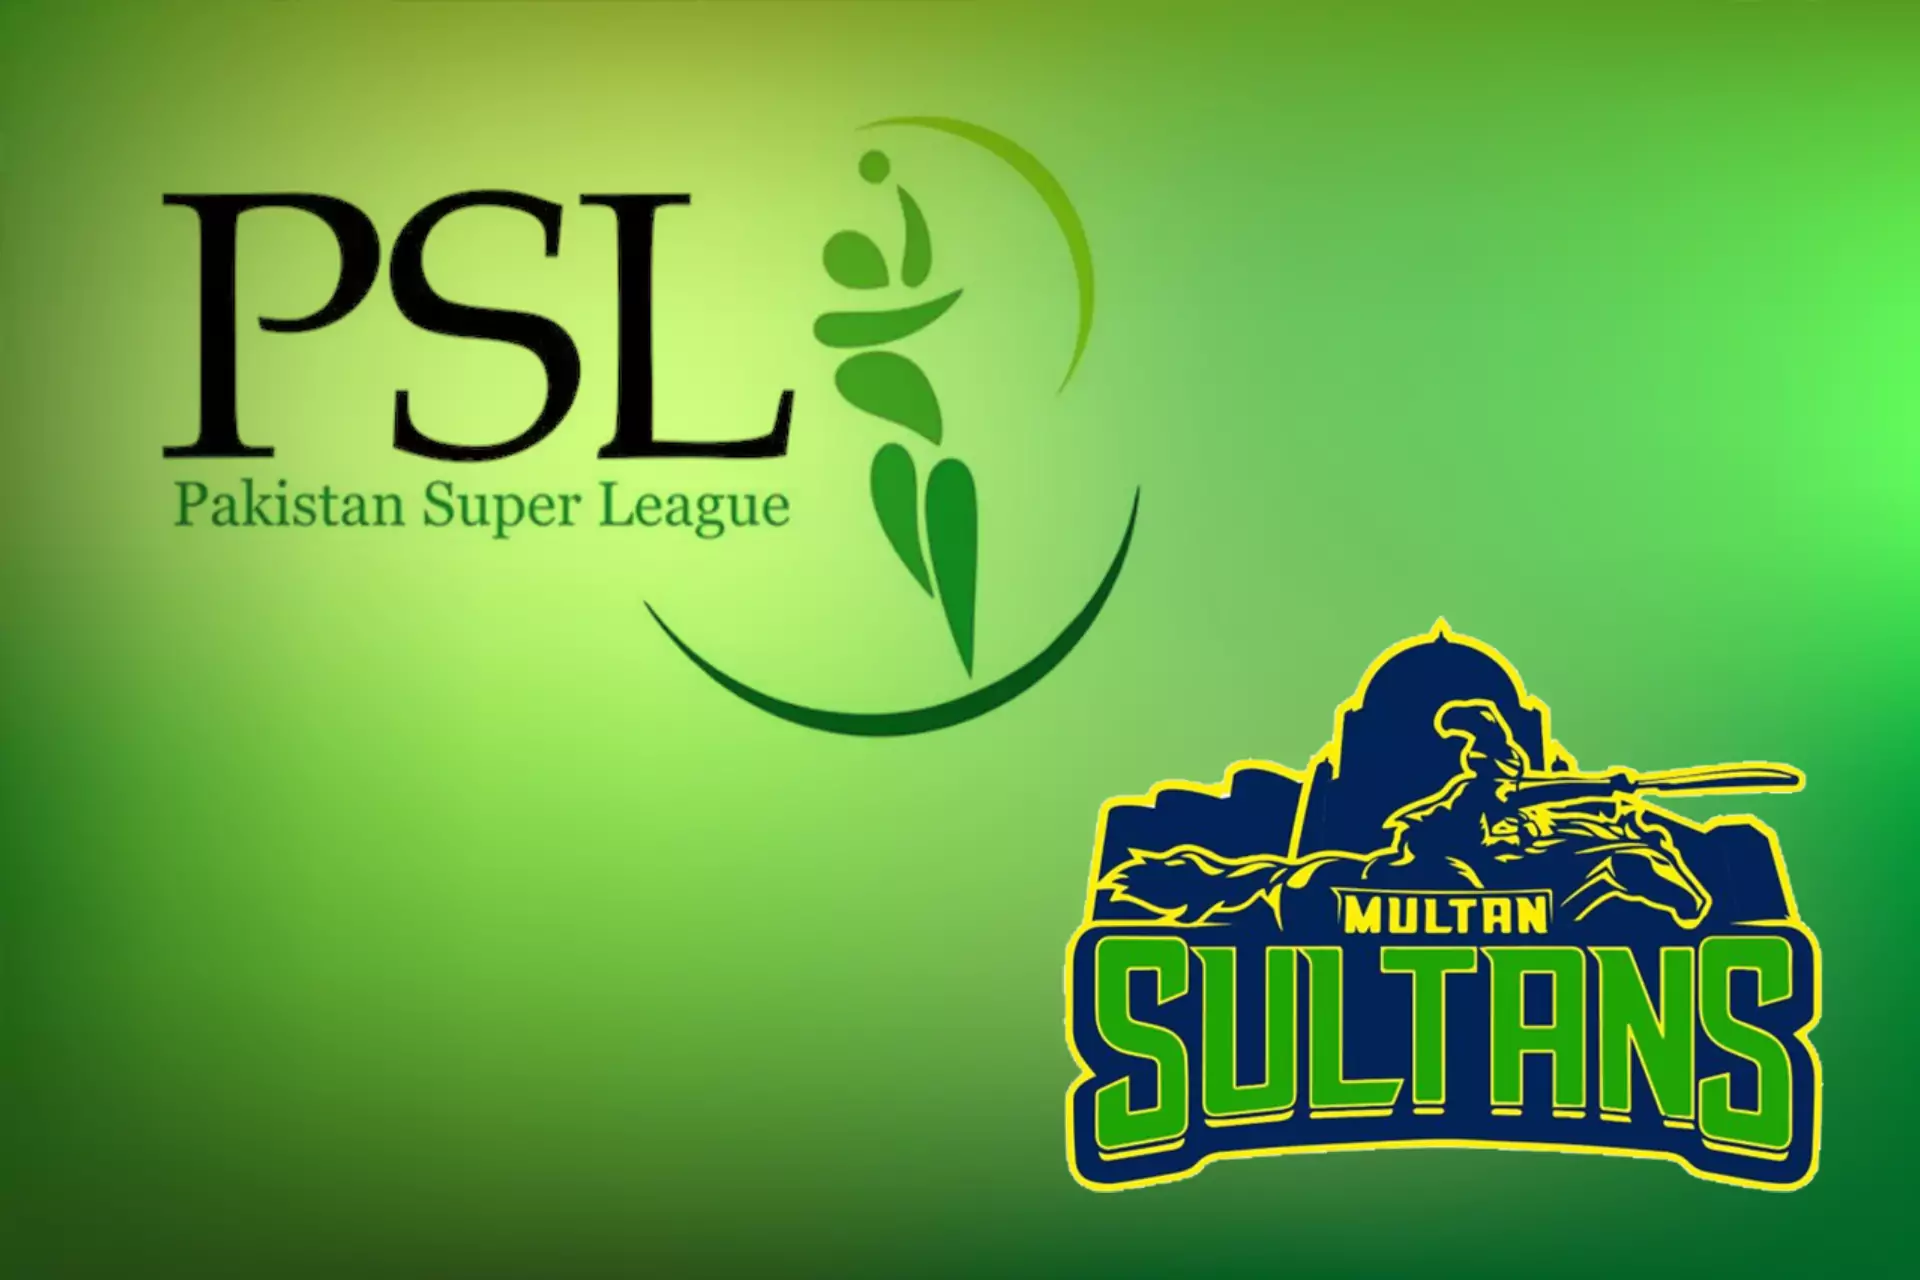 Multan Sultans beat Peshawar Zalmi and won the PSL title.